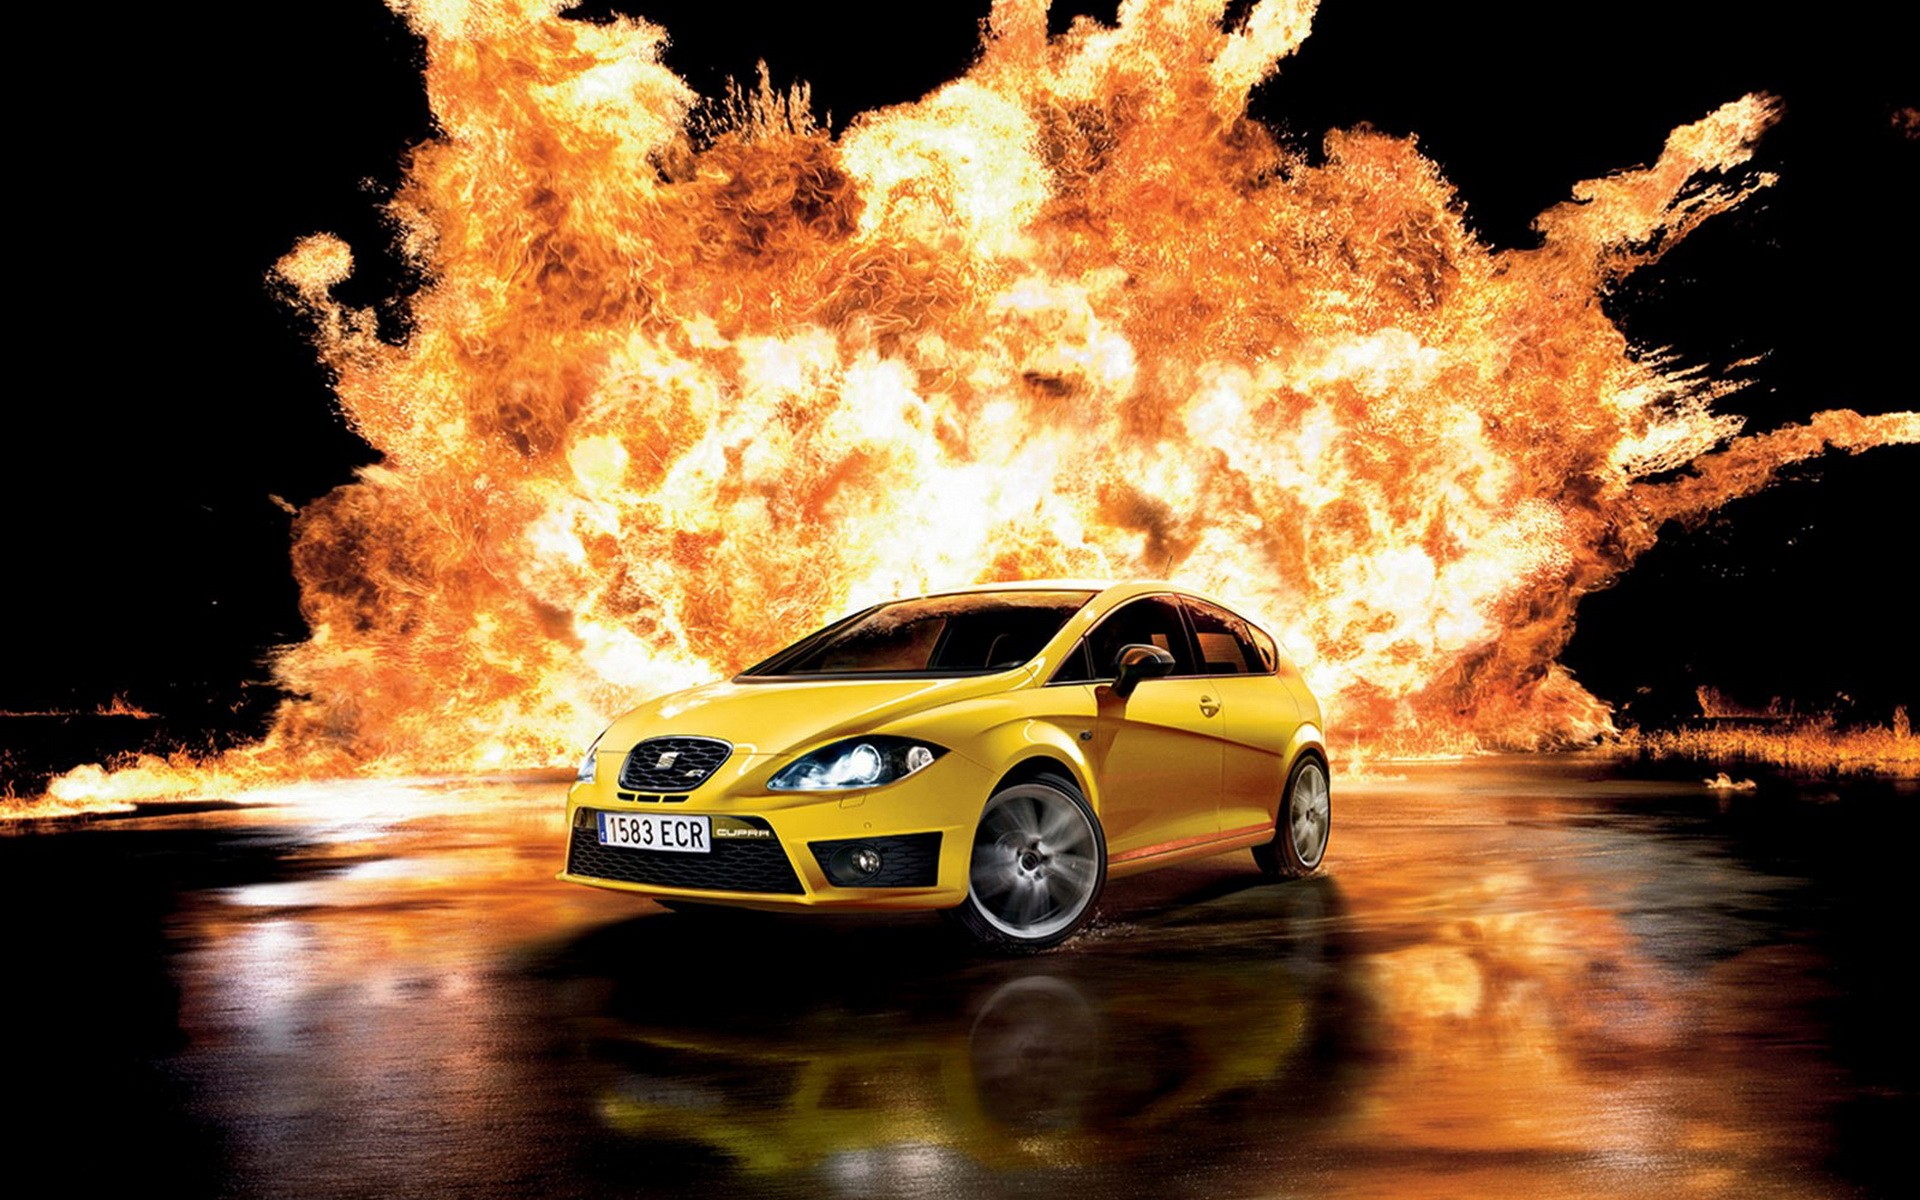 cars, explosions, Seat - desktop wallpaper